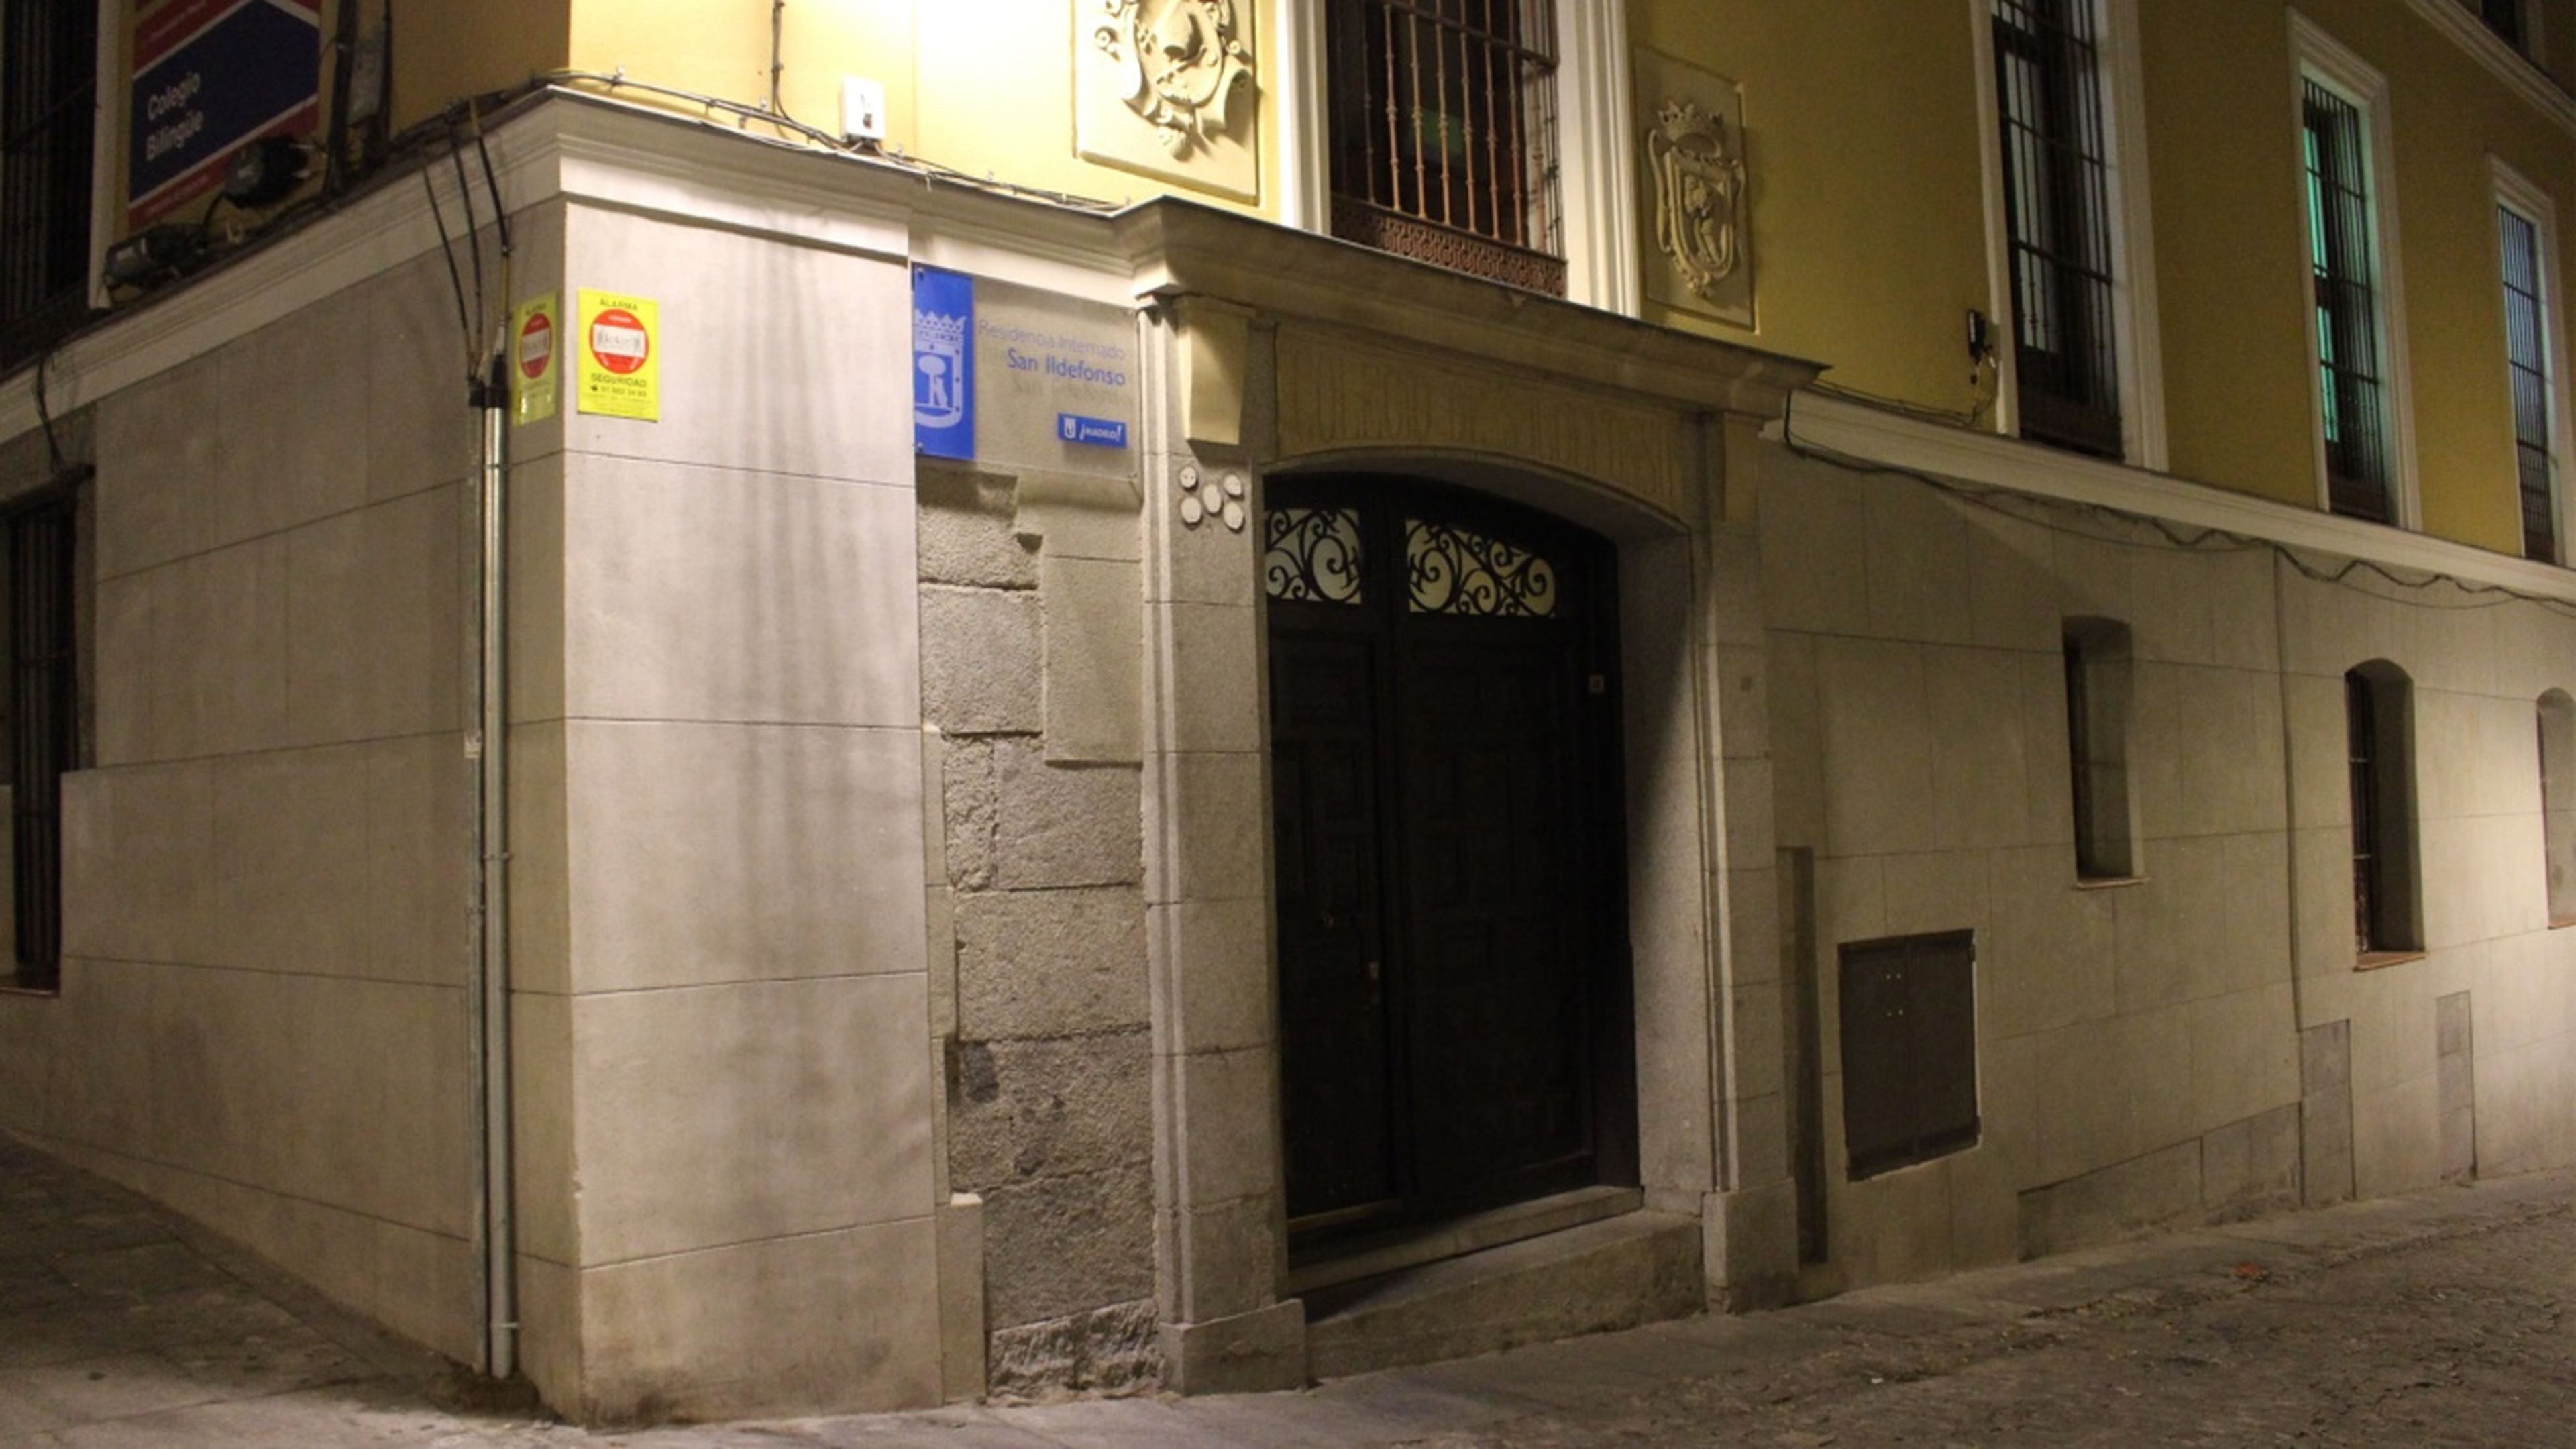 La residencia internado de San Ildefonso está en la Calle Alfonso VI, 1 de Madrid